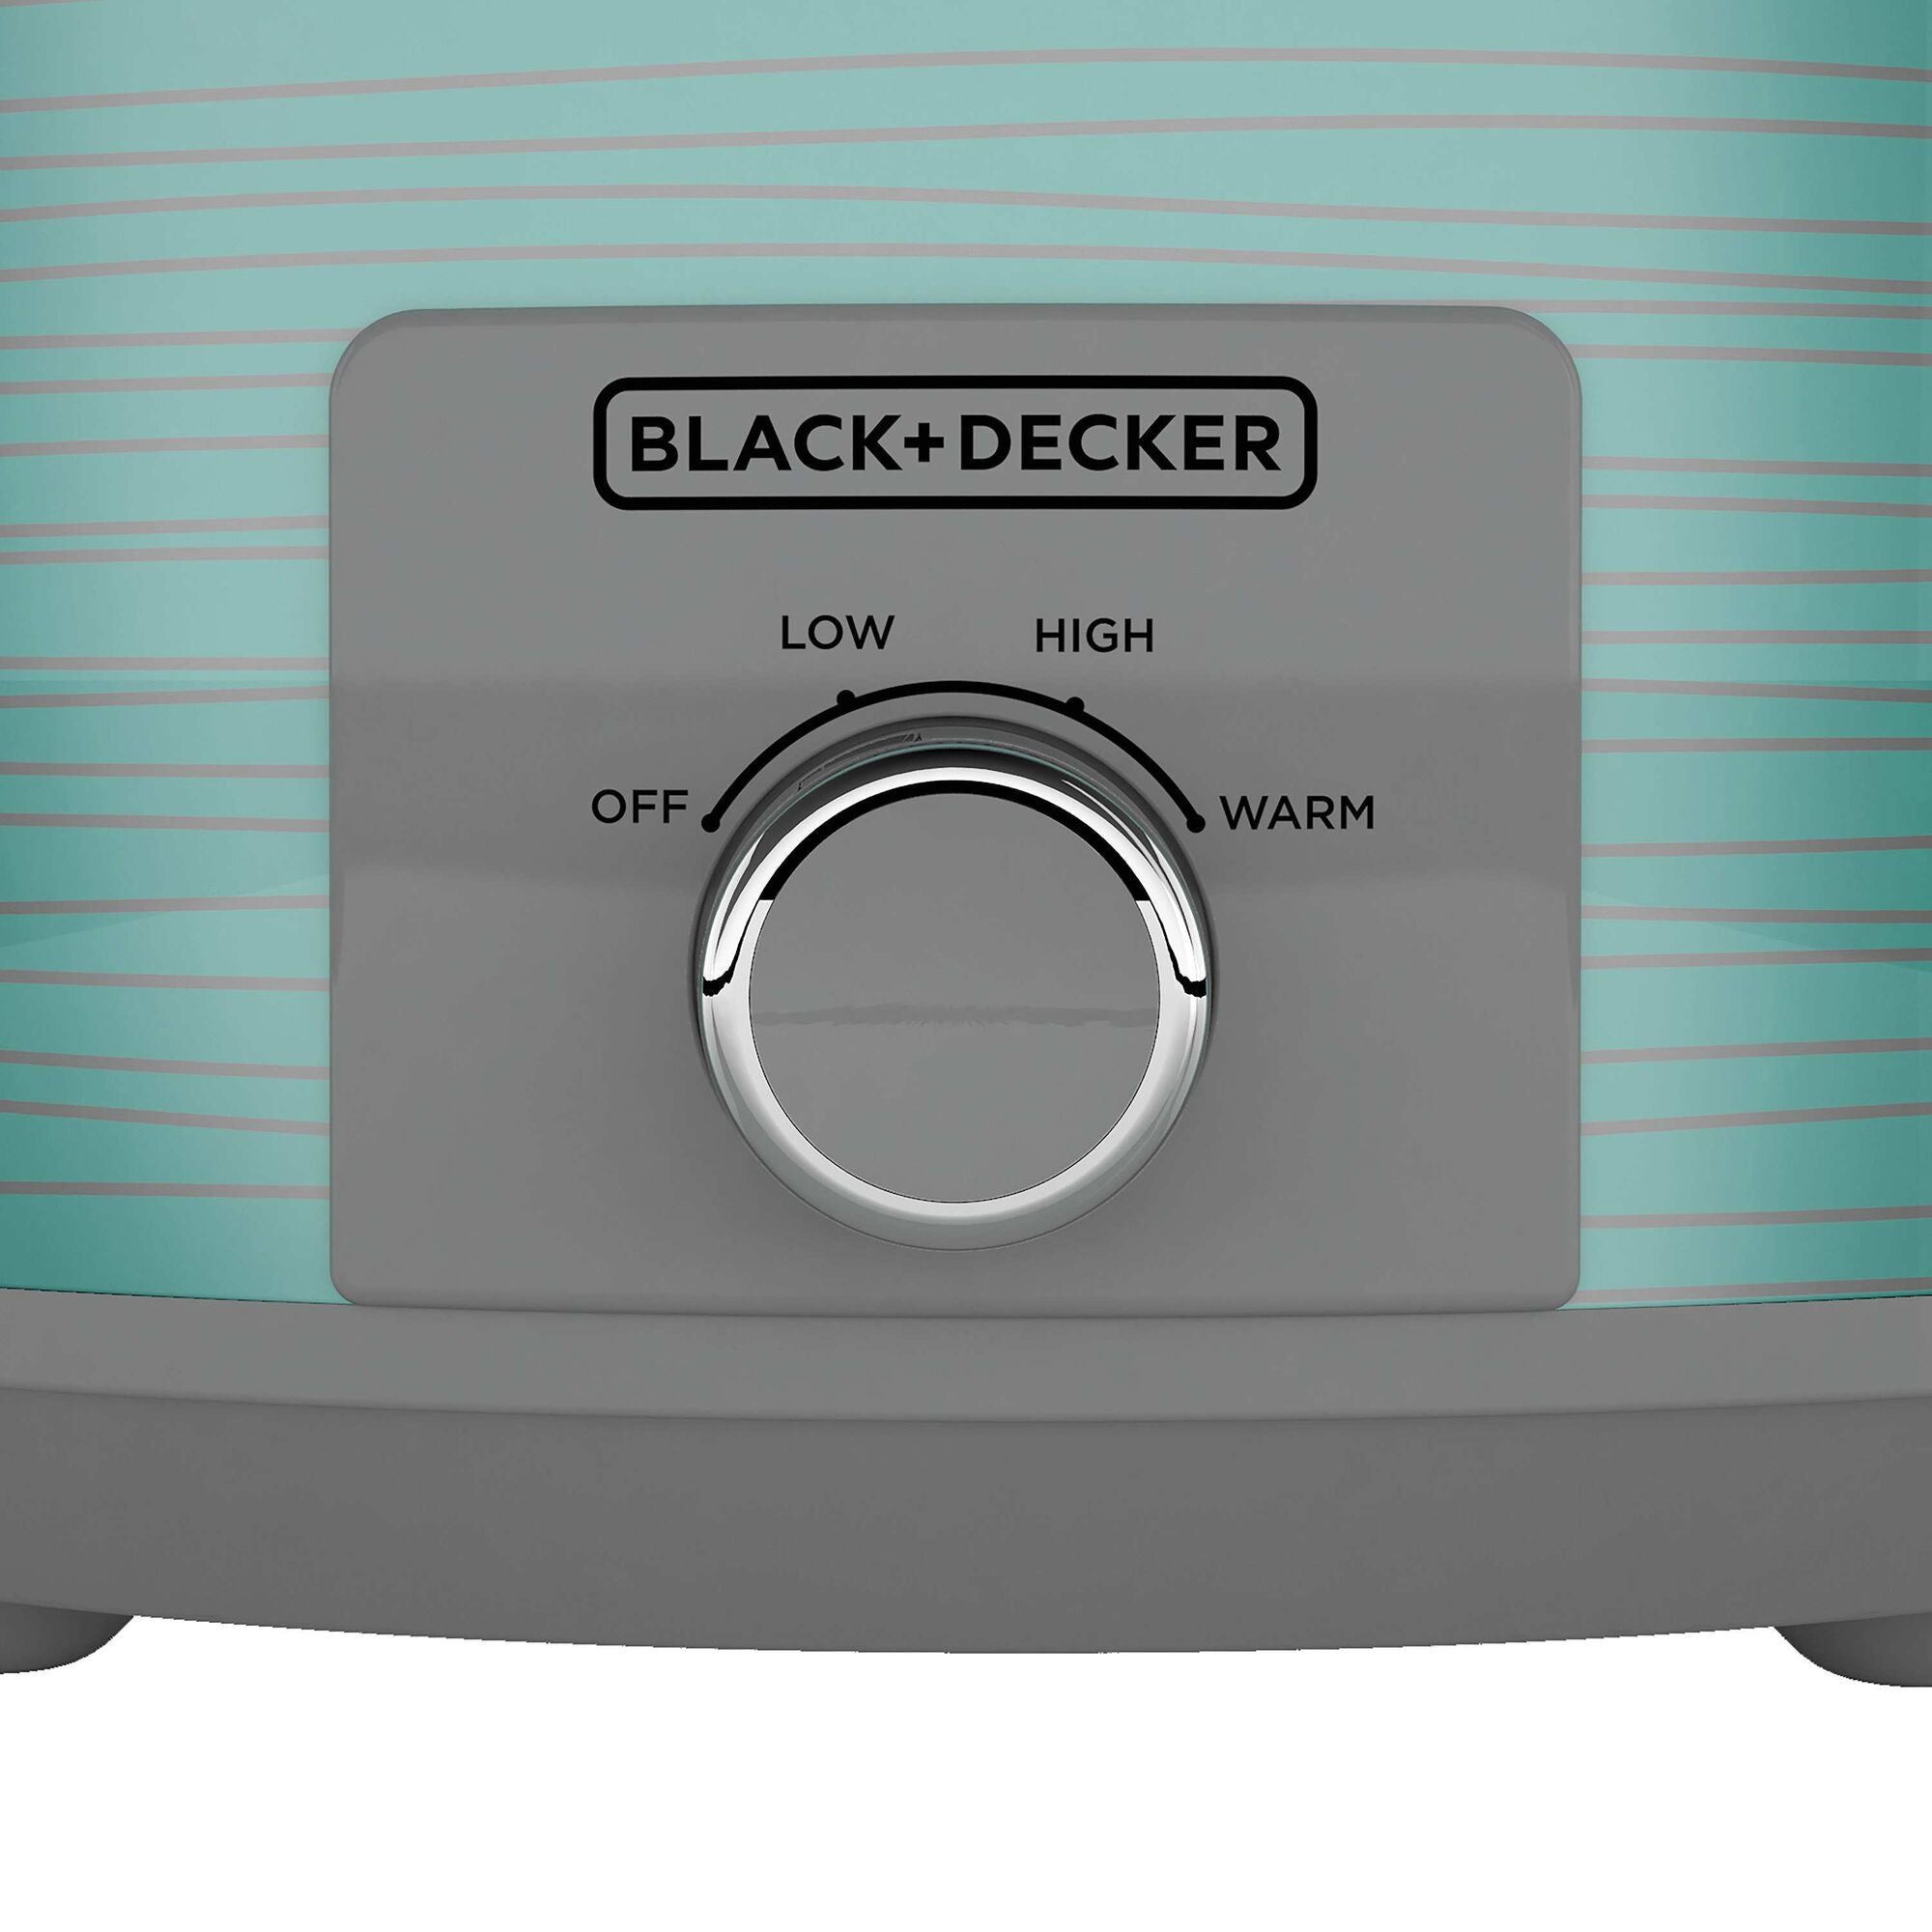 Black & Decker Slow Cooker Matte Black Model SC4004D 